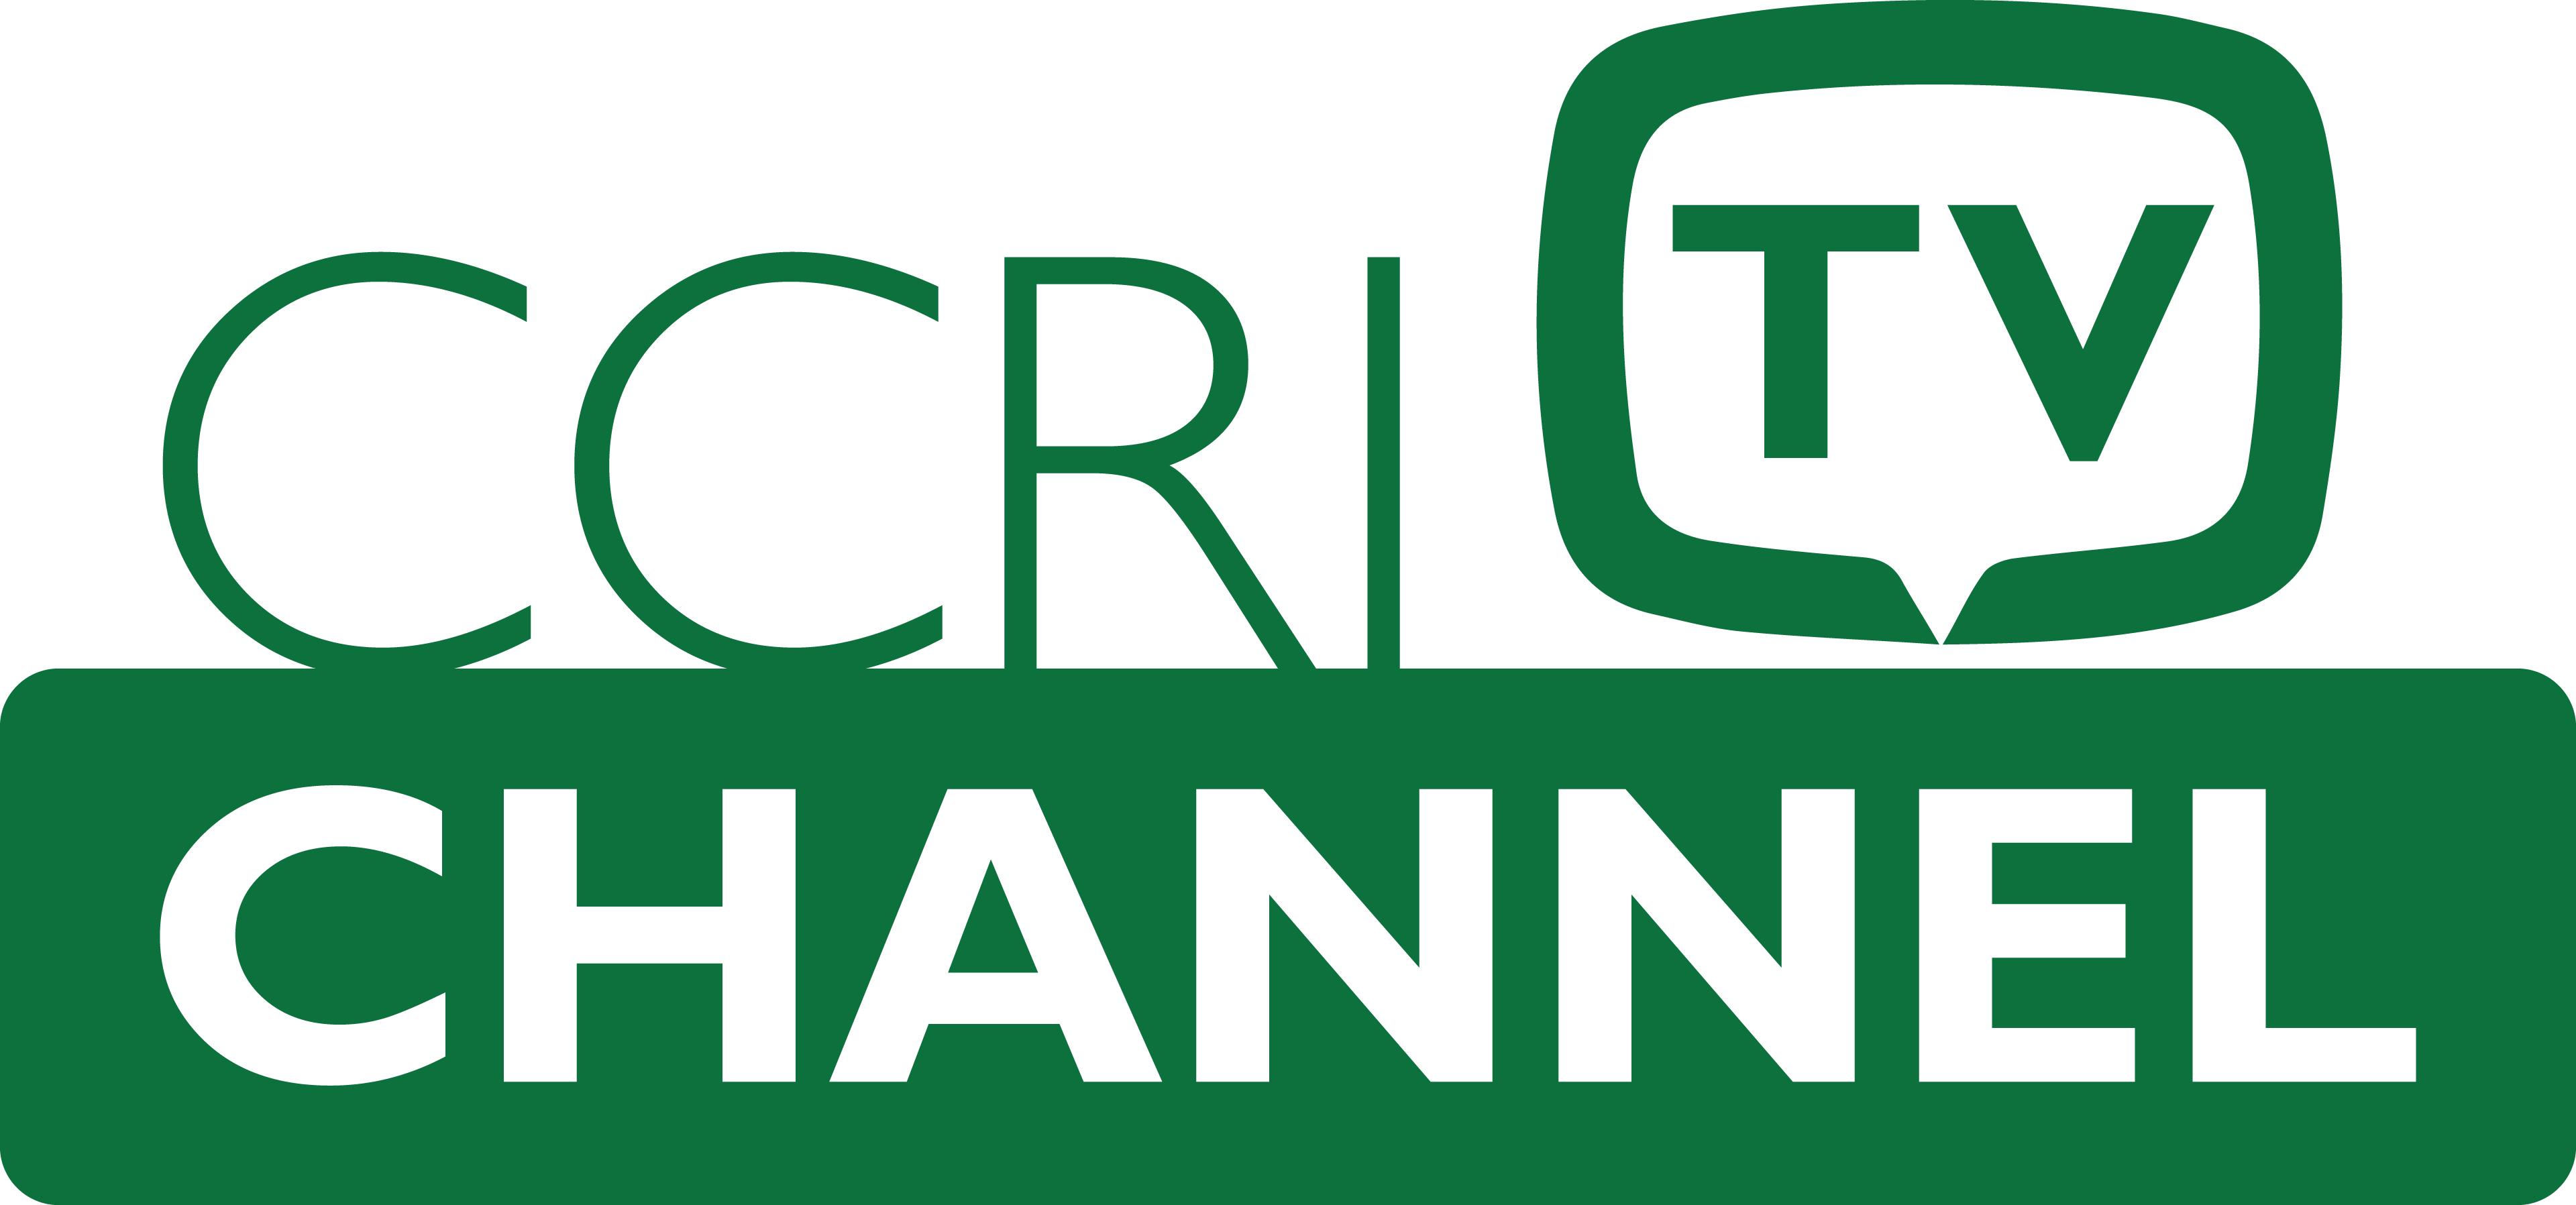 ccri channel logo